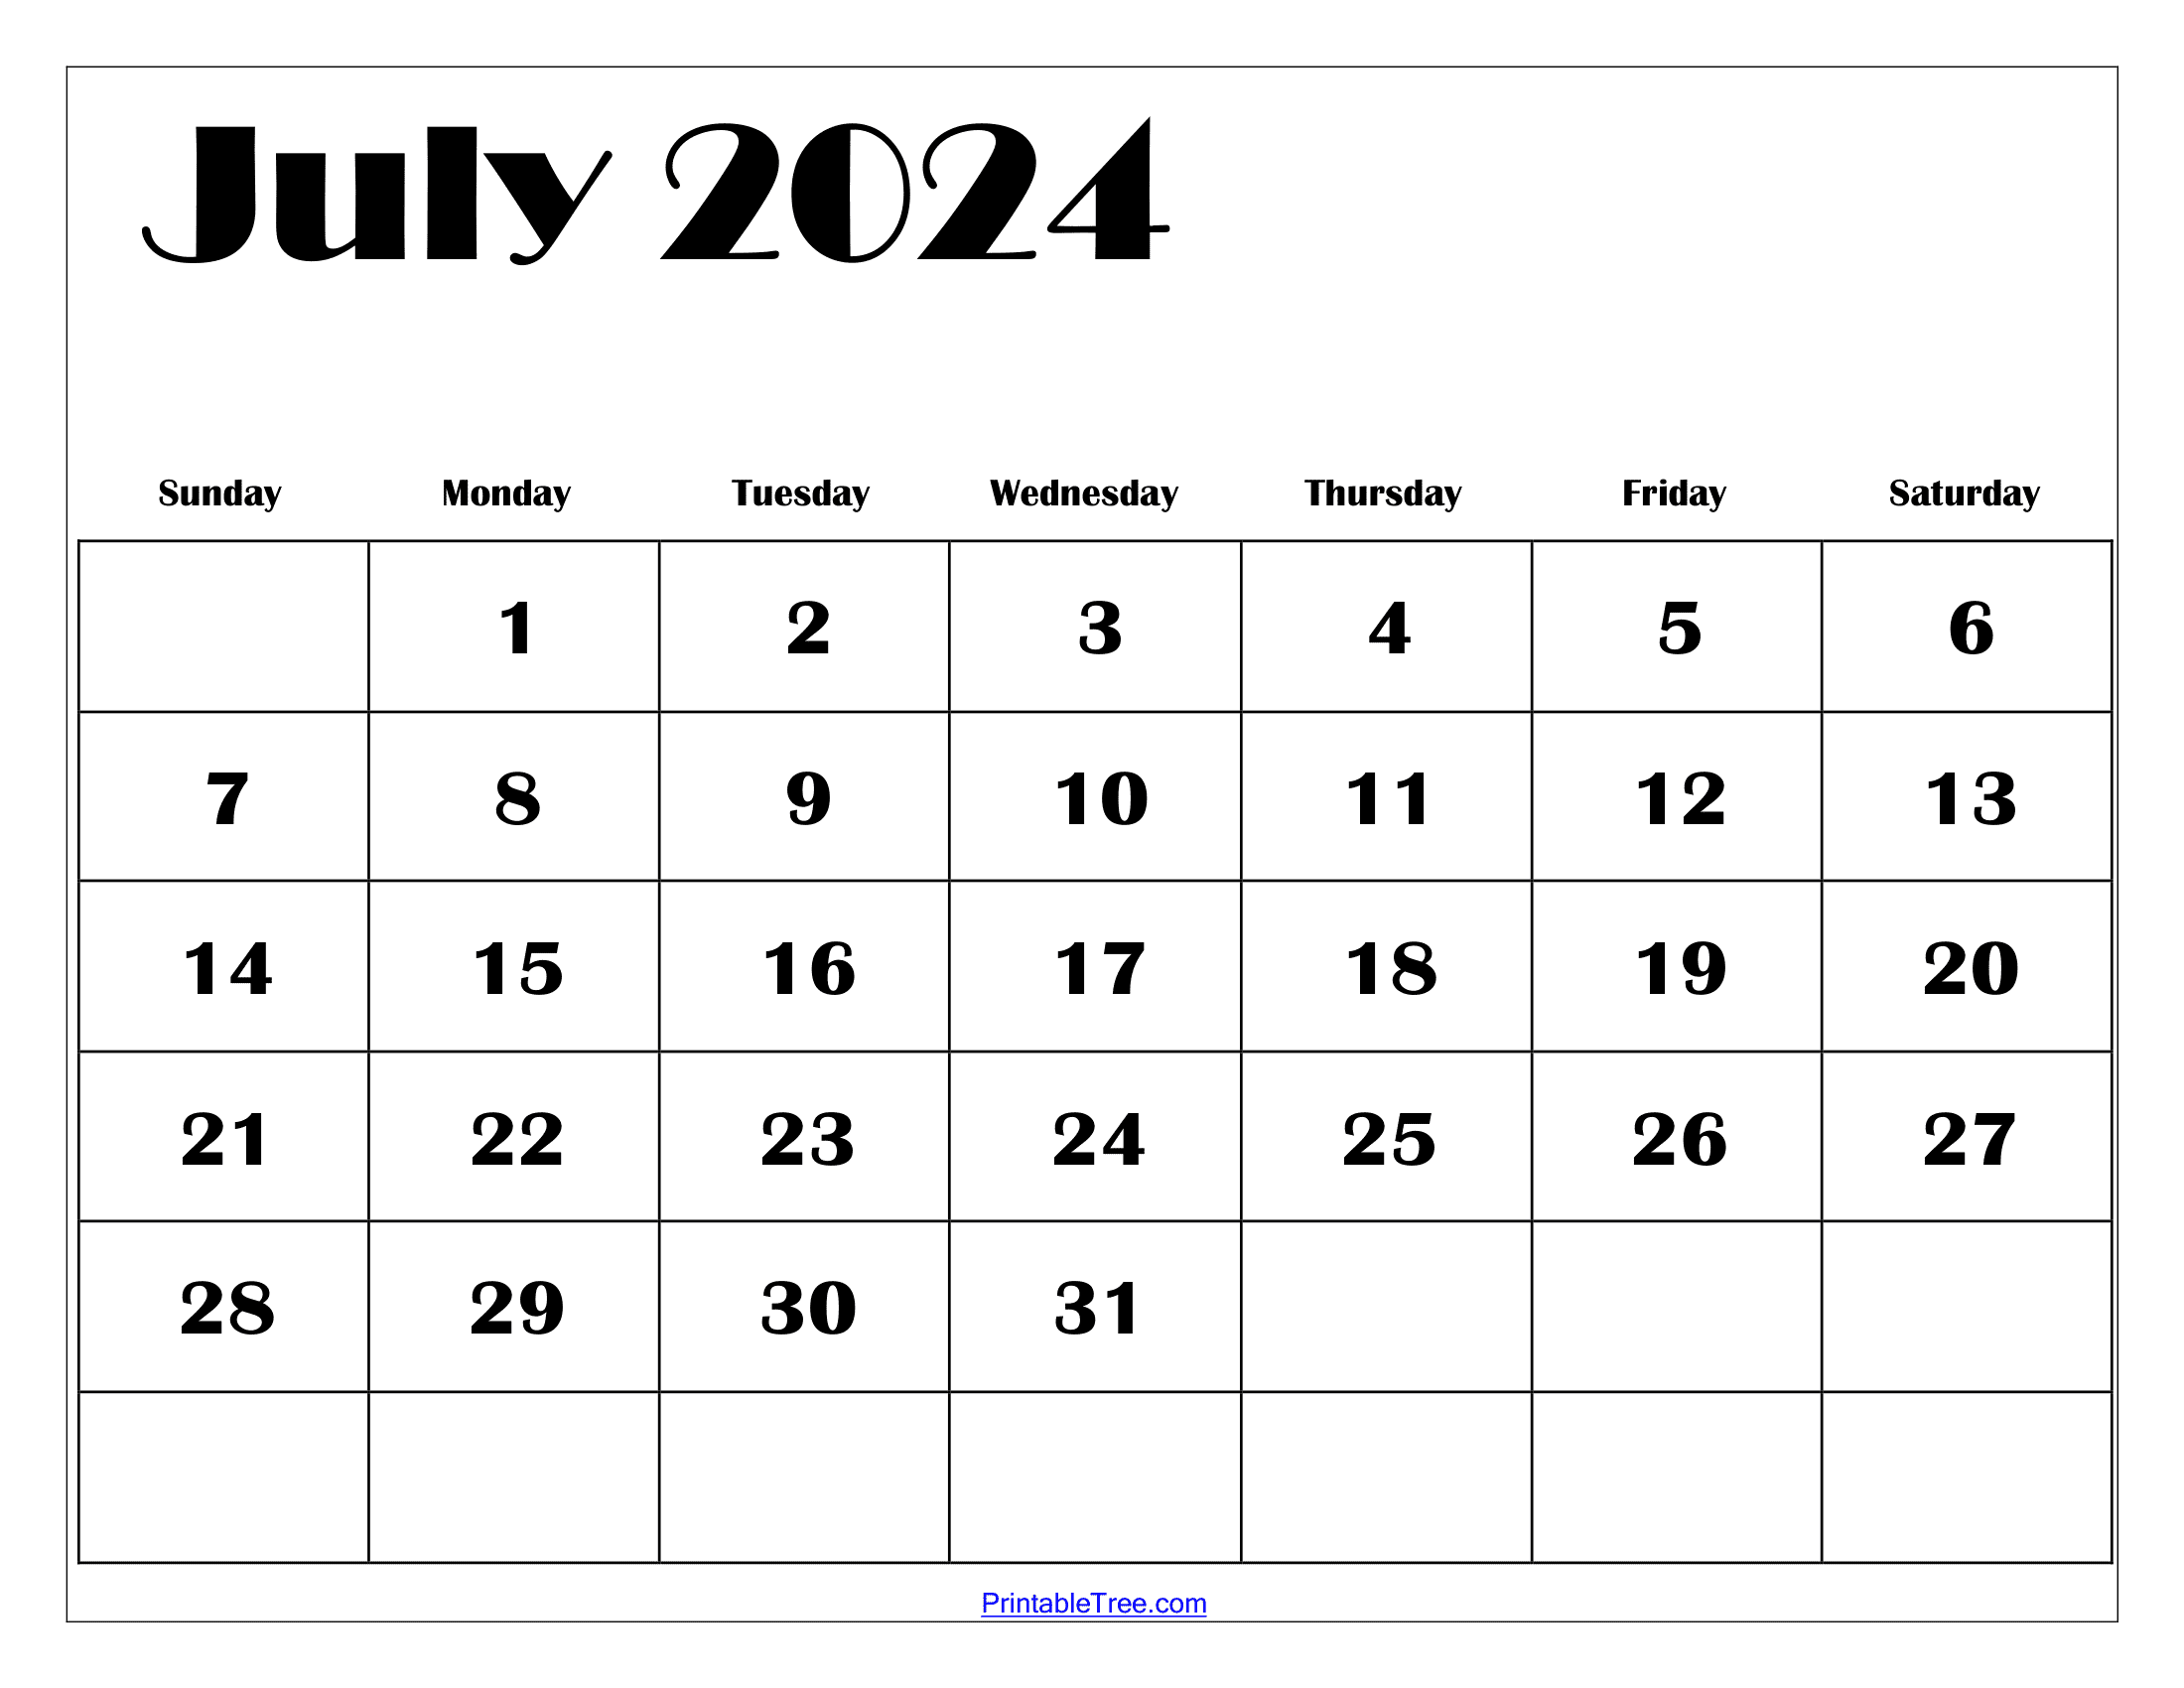 July 2024 Calendar Printable Pdf With Holidays Free Template for July Printable Calendar 2024 Free